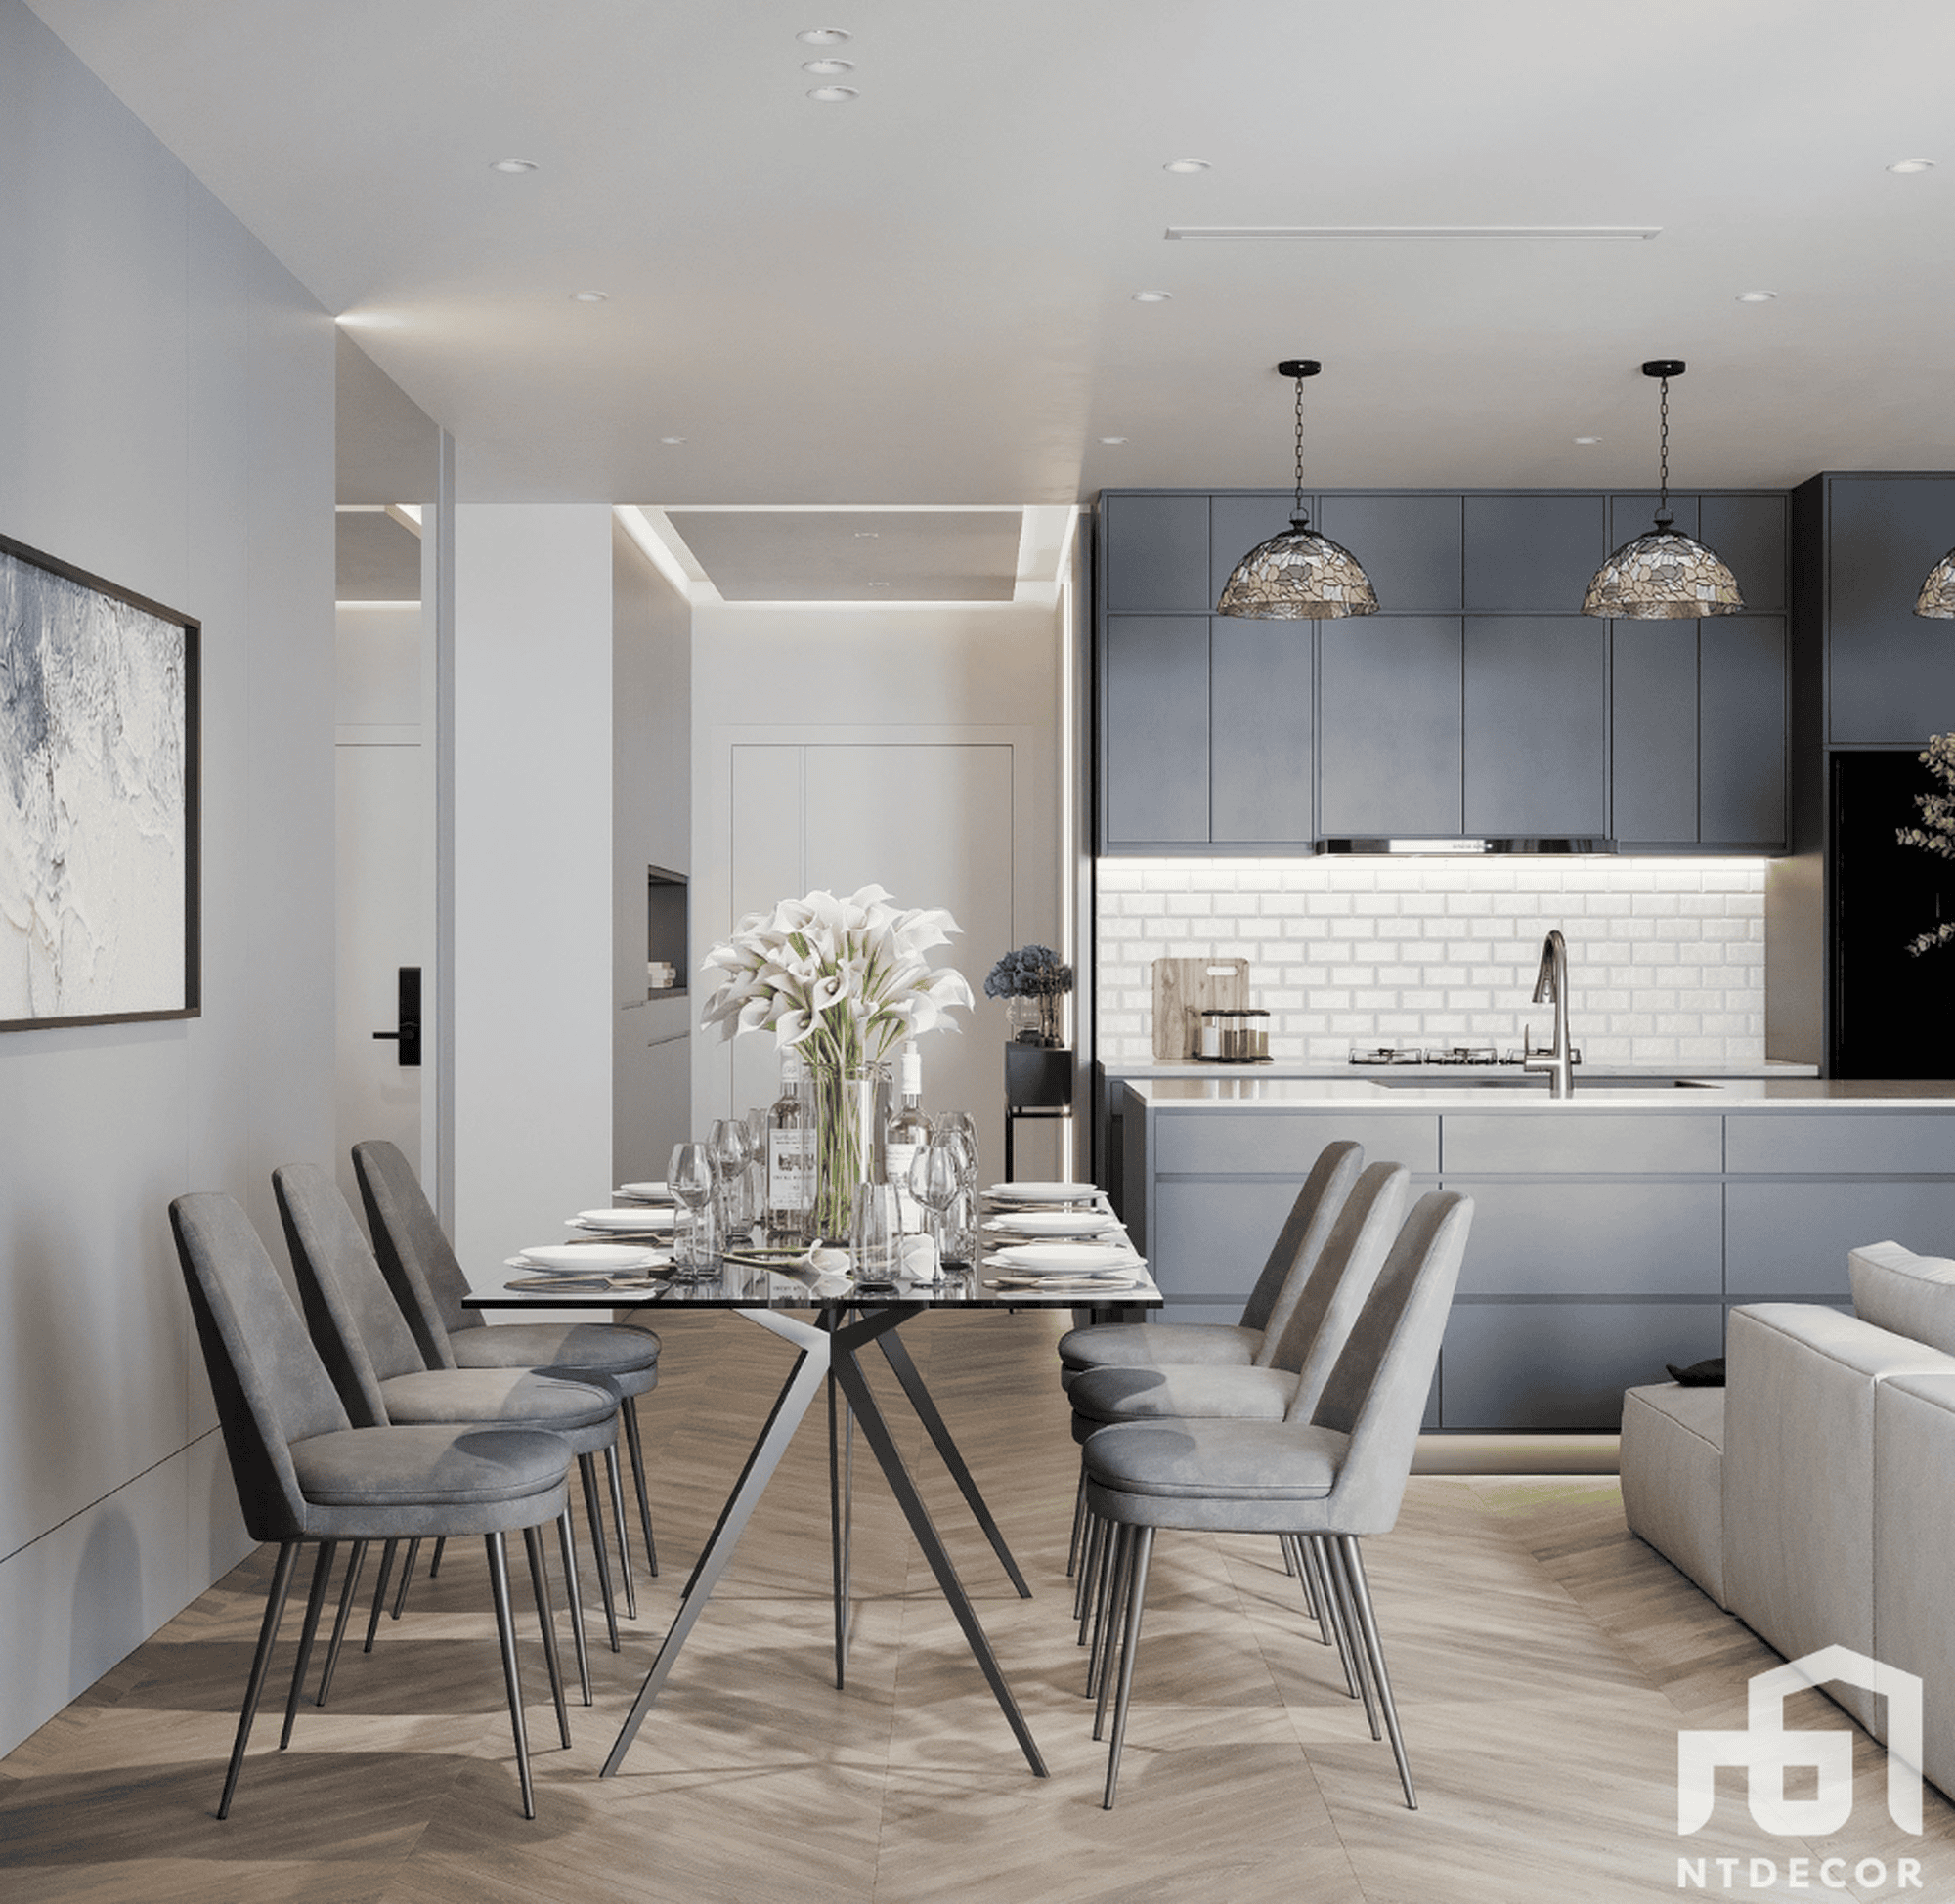 Kitchen 3D Design of Xi Riverview Palace Interior Design Modern Style | NTDecor